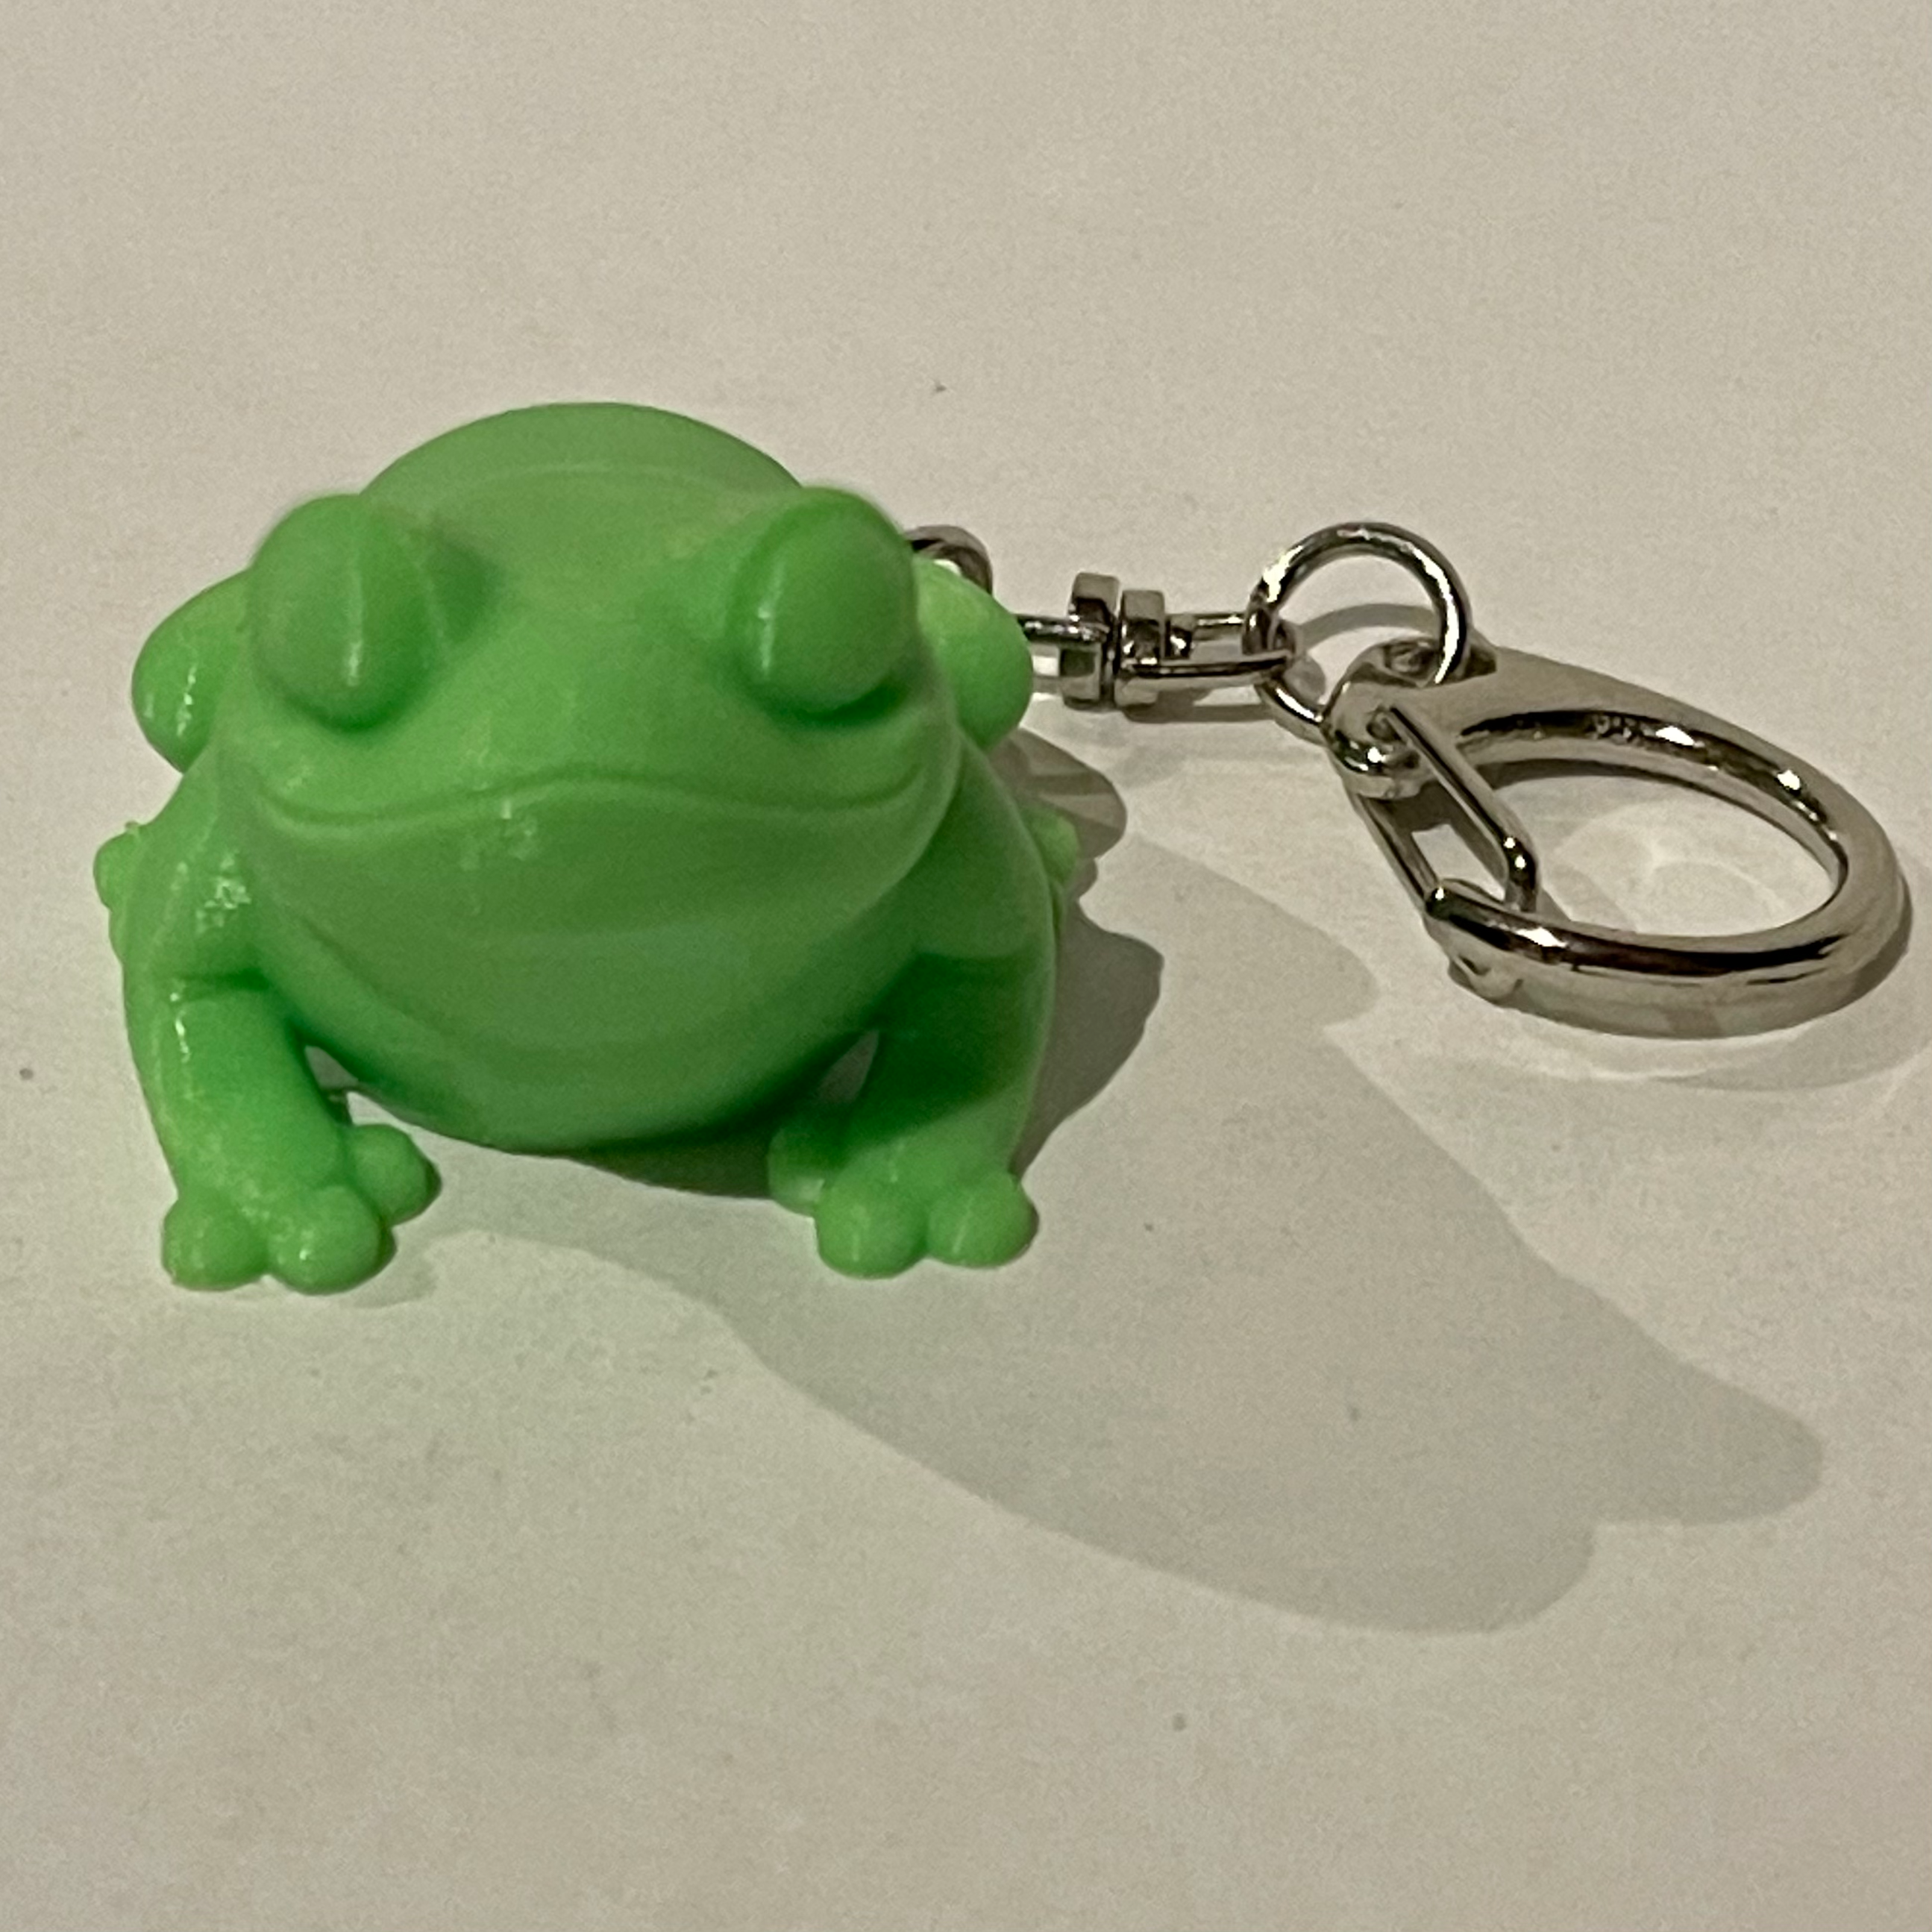 Tiny butt Frog